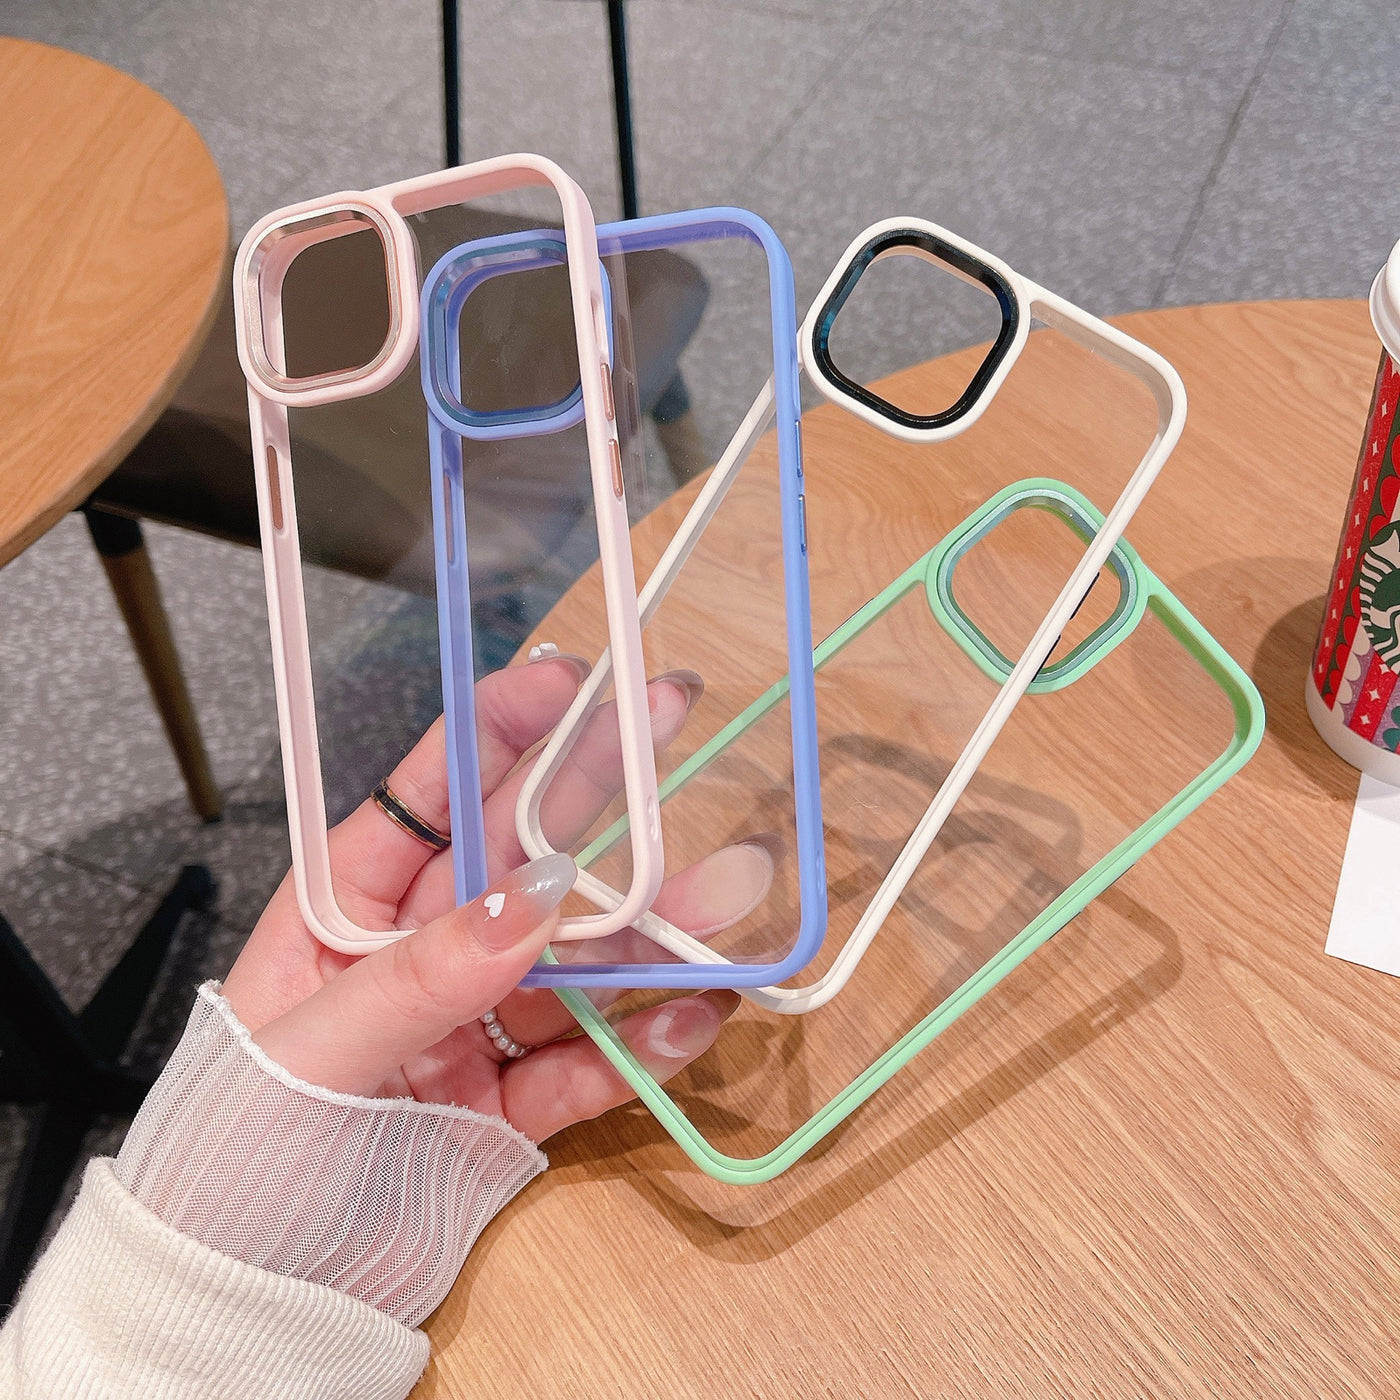 【iPhone Case】人気 シンプル クリア 透明 耐衝撃 11色  iPhoneケース